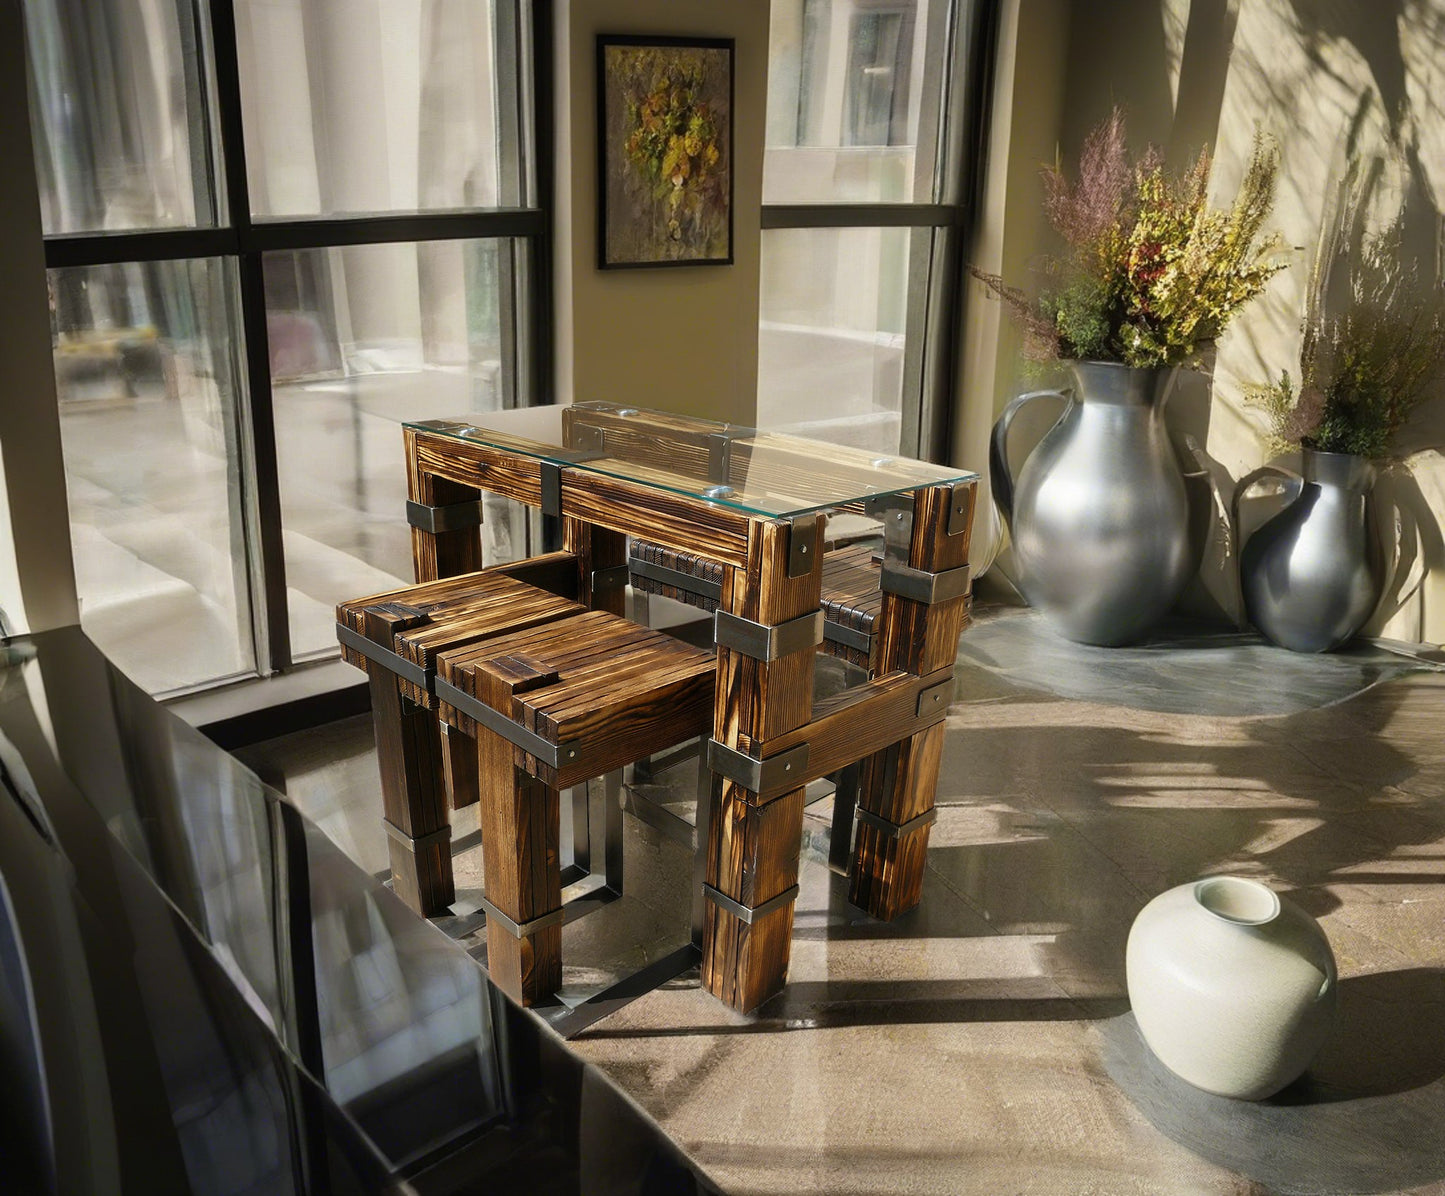 CHYRKA® Eettafel woonkamer tafel DROHOBYCZ kruk loft vintage bar industrieel design handgemaakt hout glas metaal